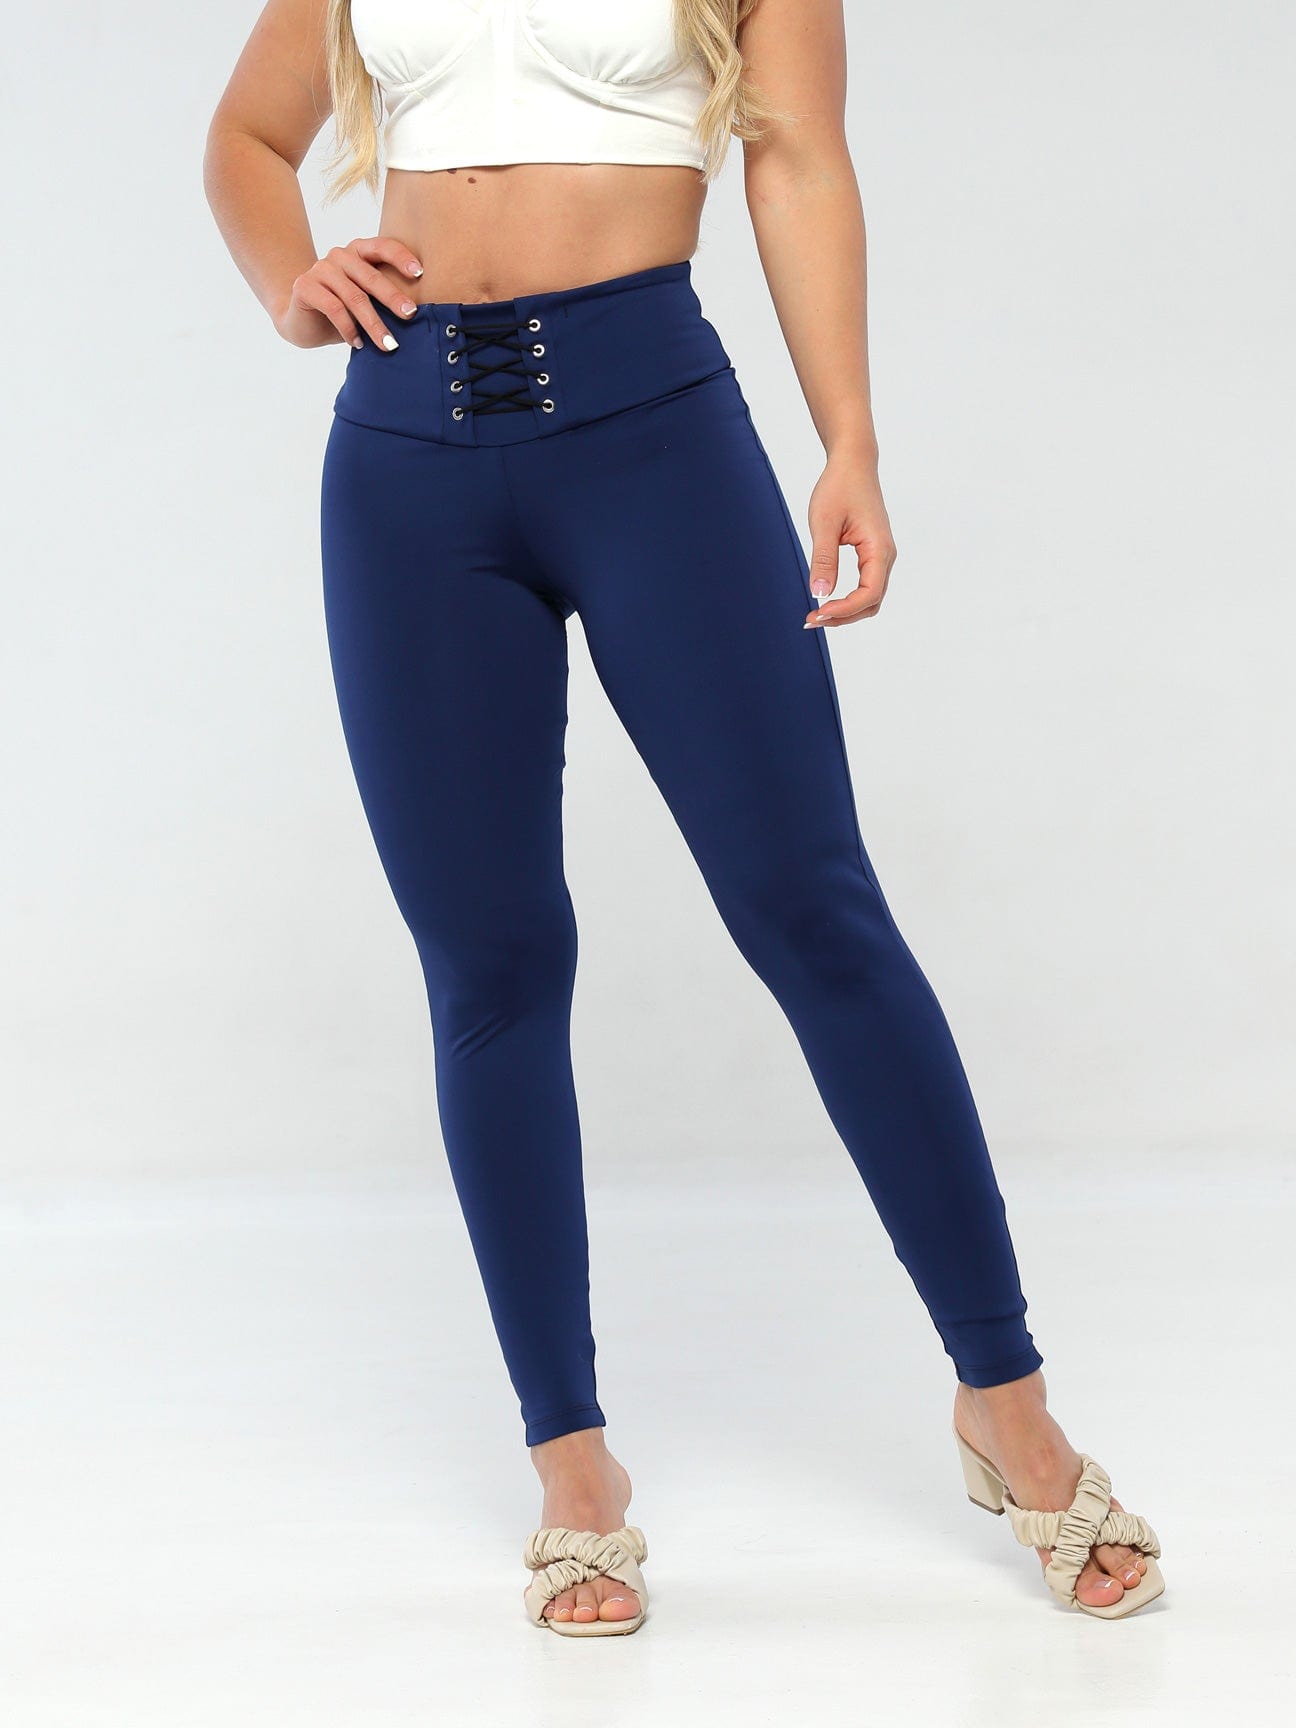 colombian leggings for women Pants High Waisted Jeggings Tummy